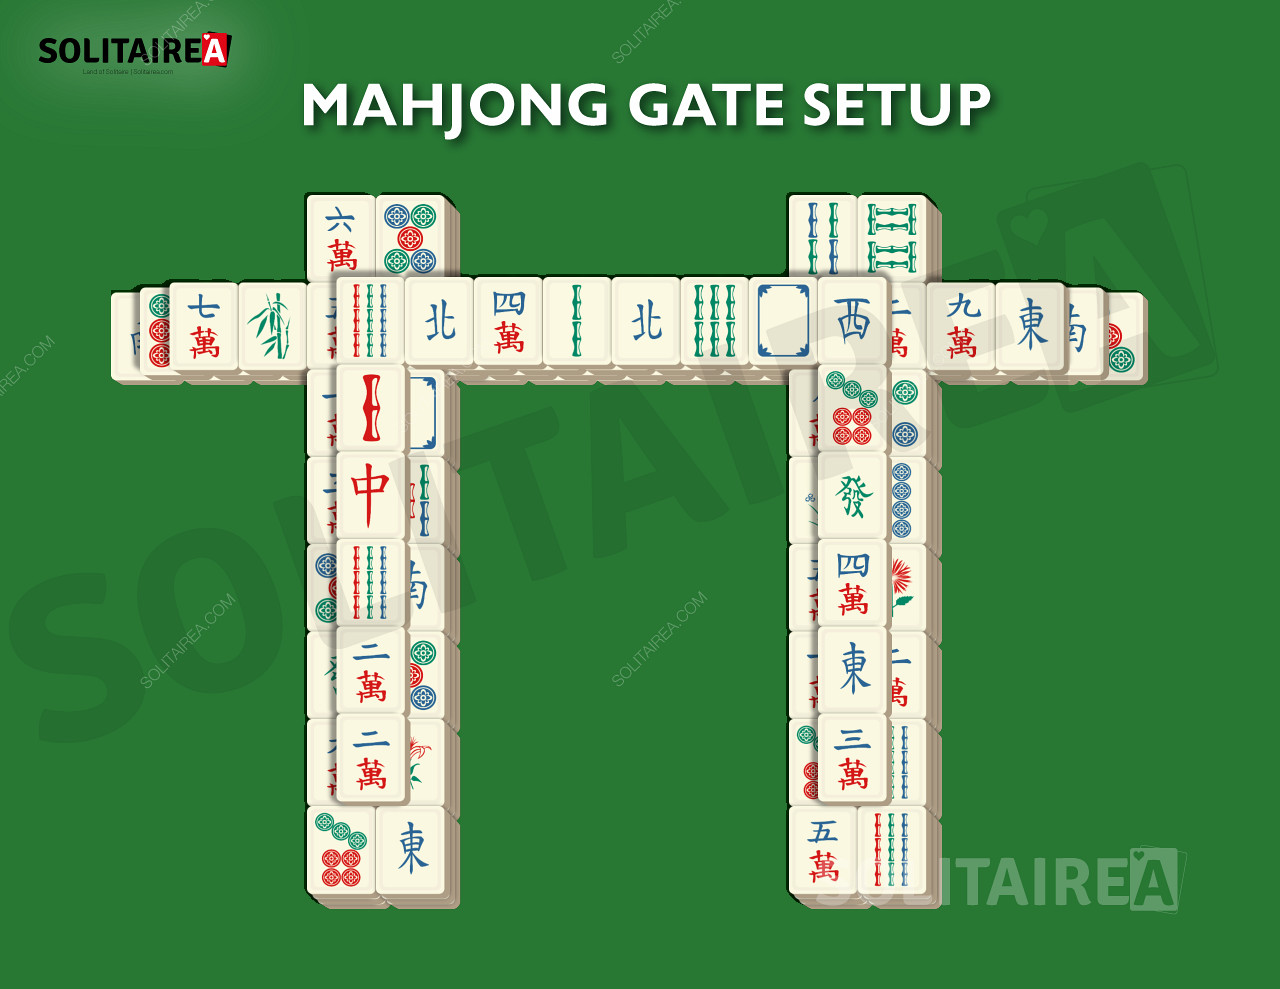 Mahjong Gate setup and strategy